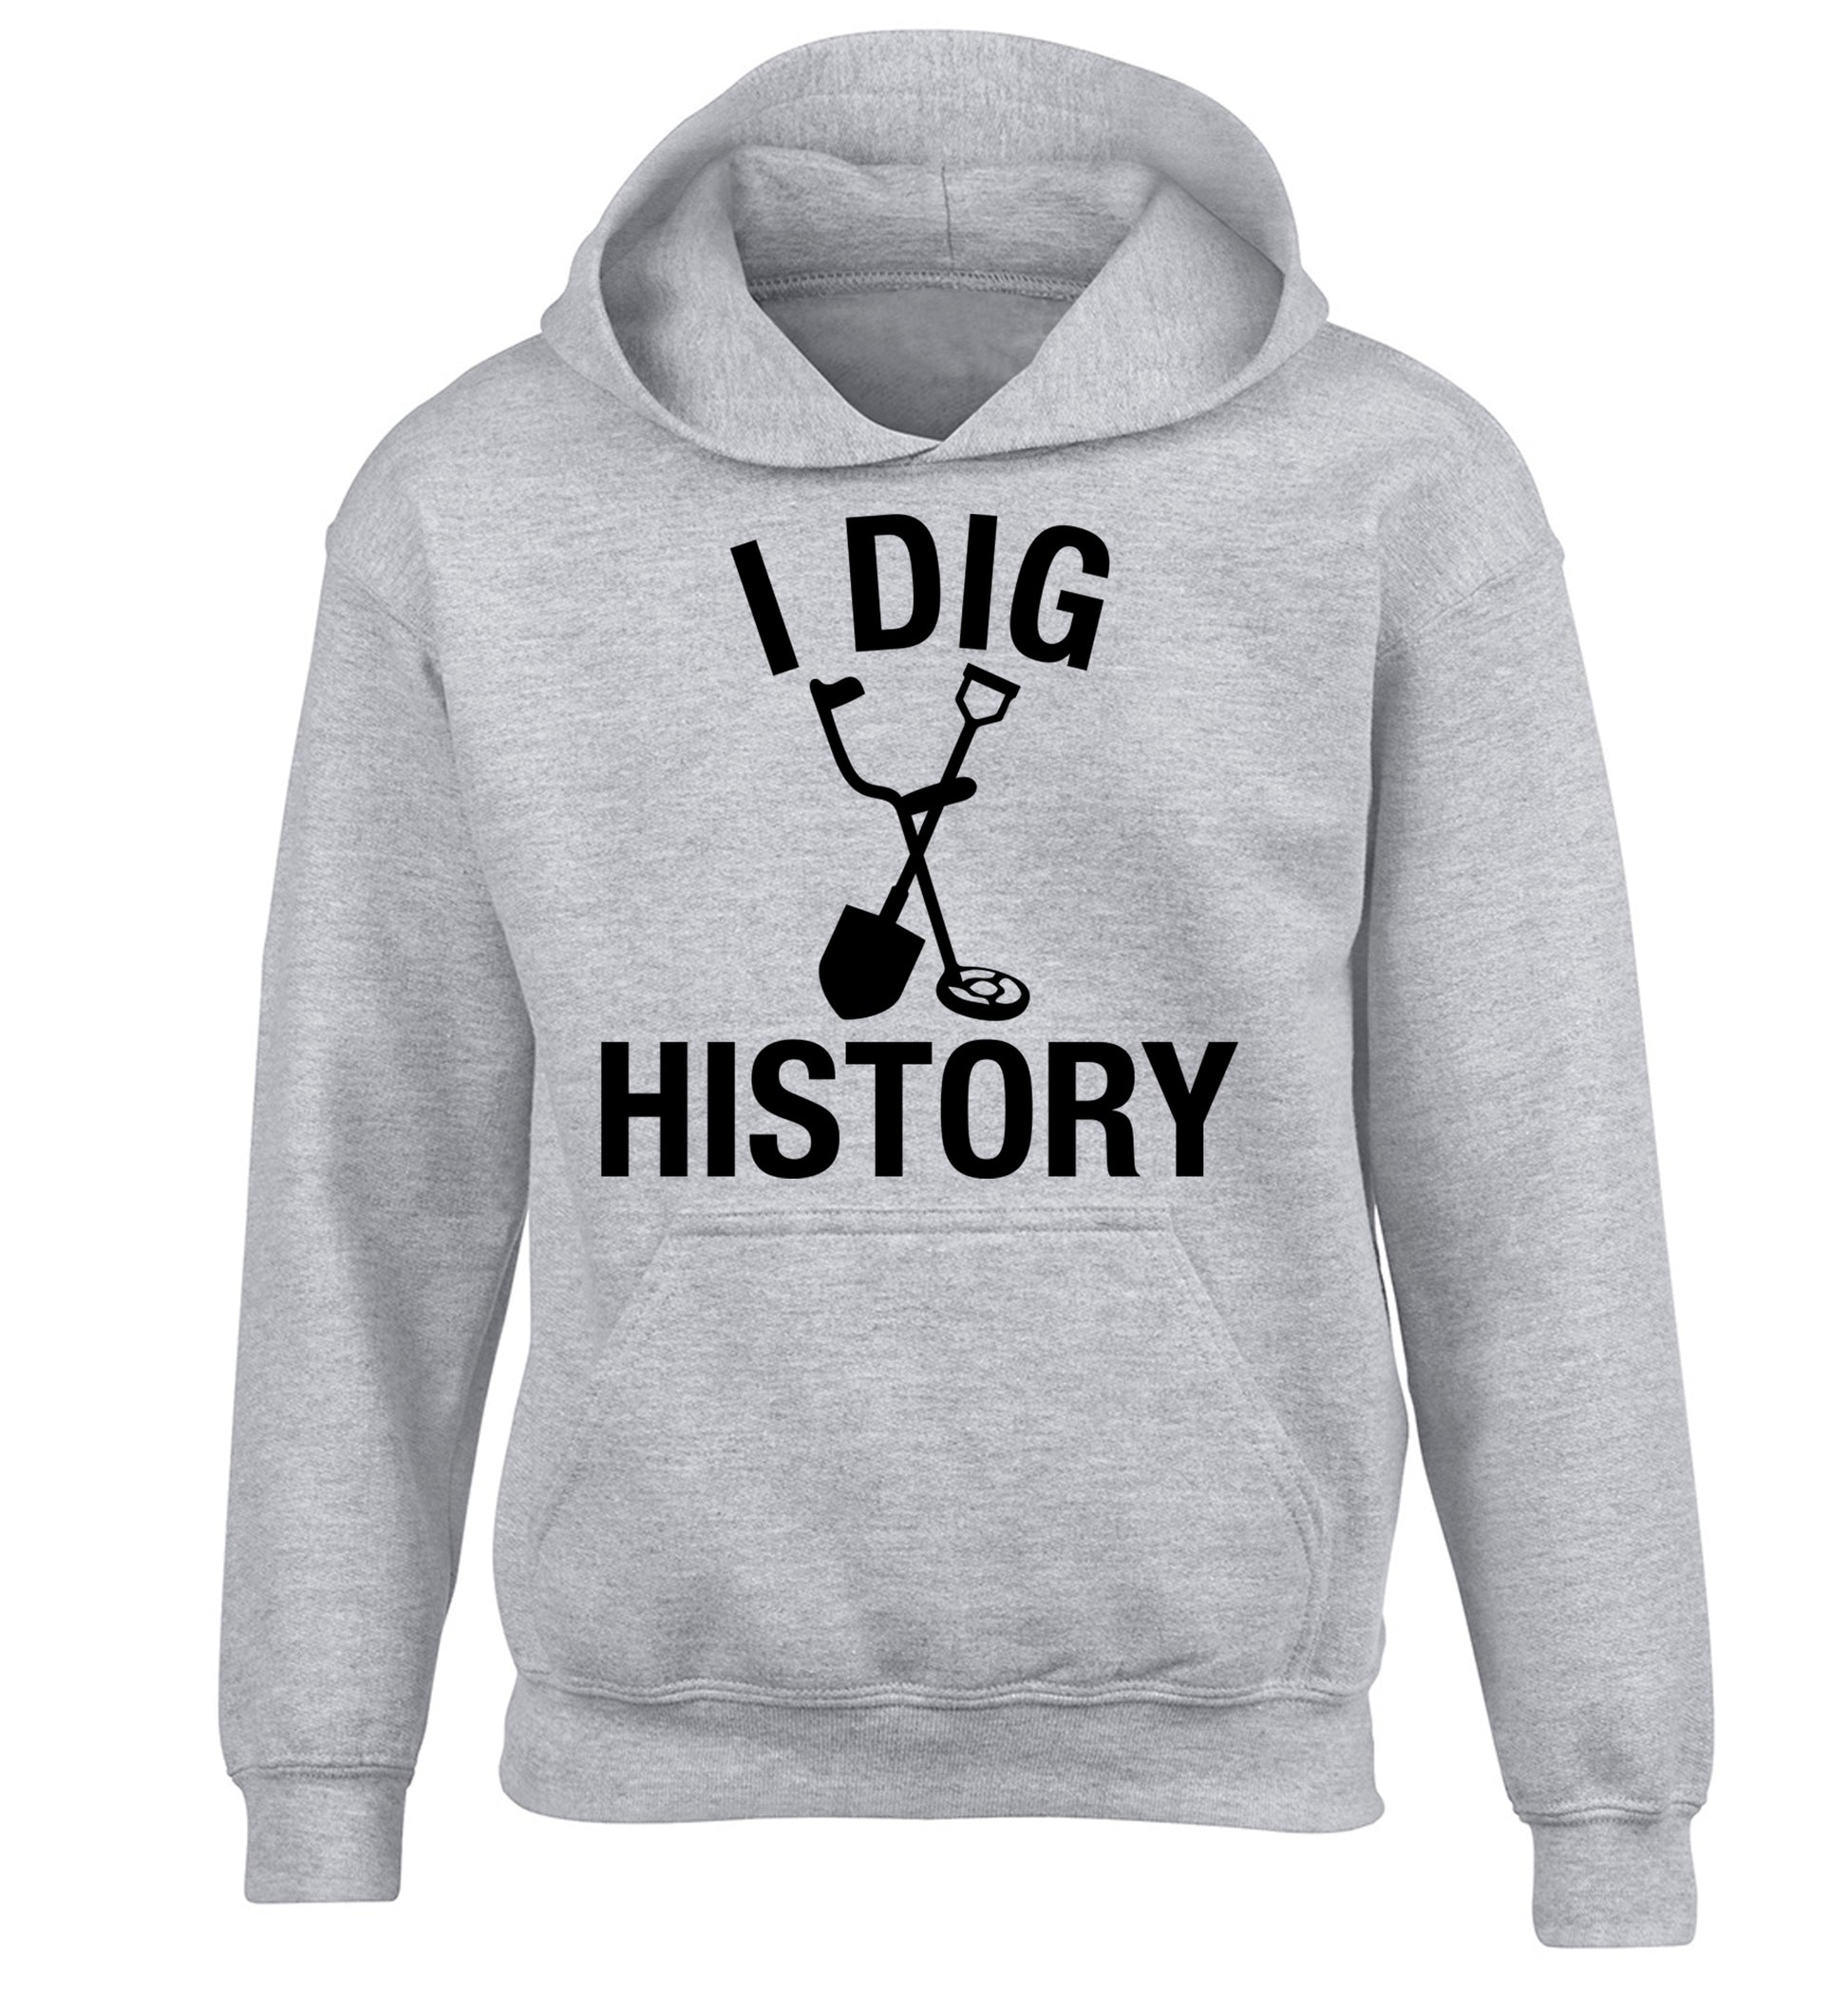 I dig history children's grey hoodie 12-13 Years